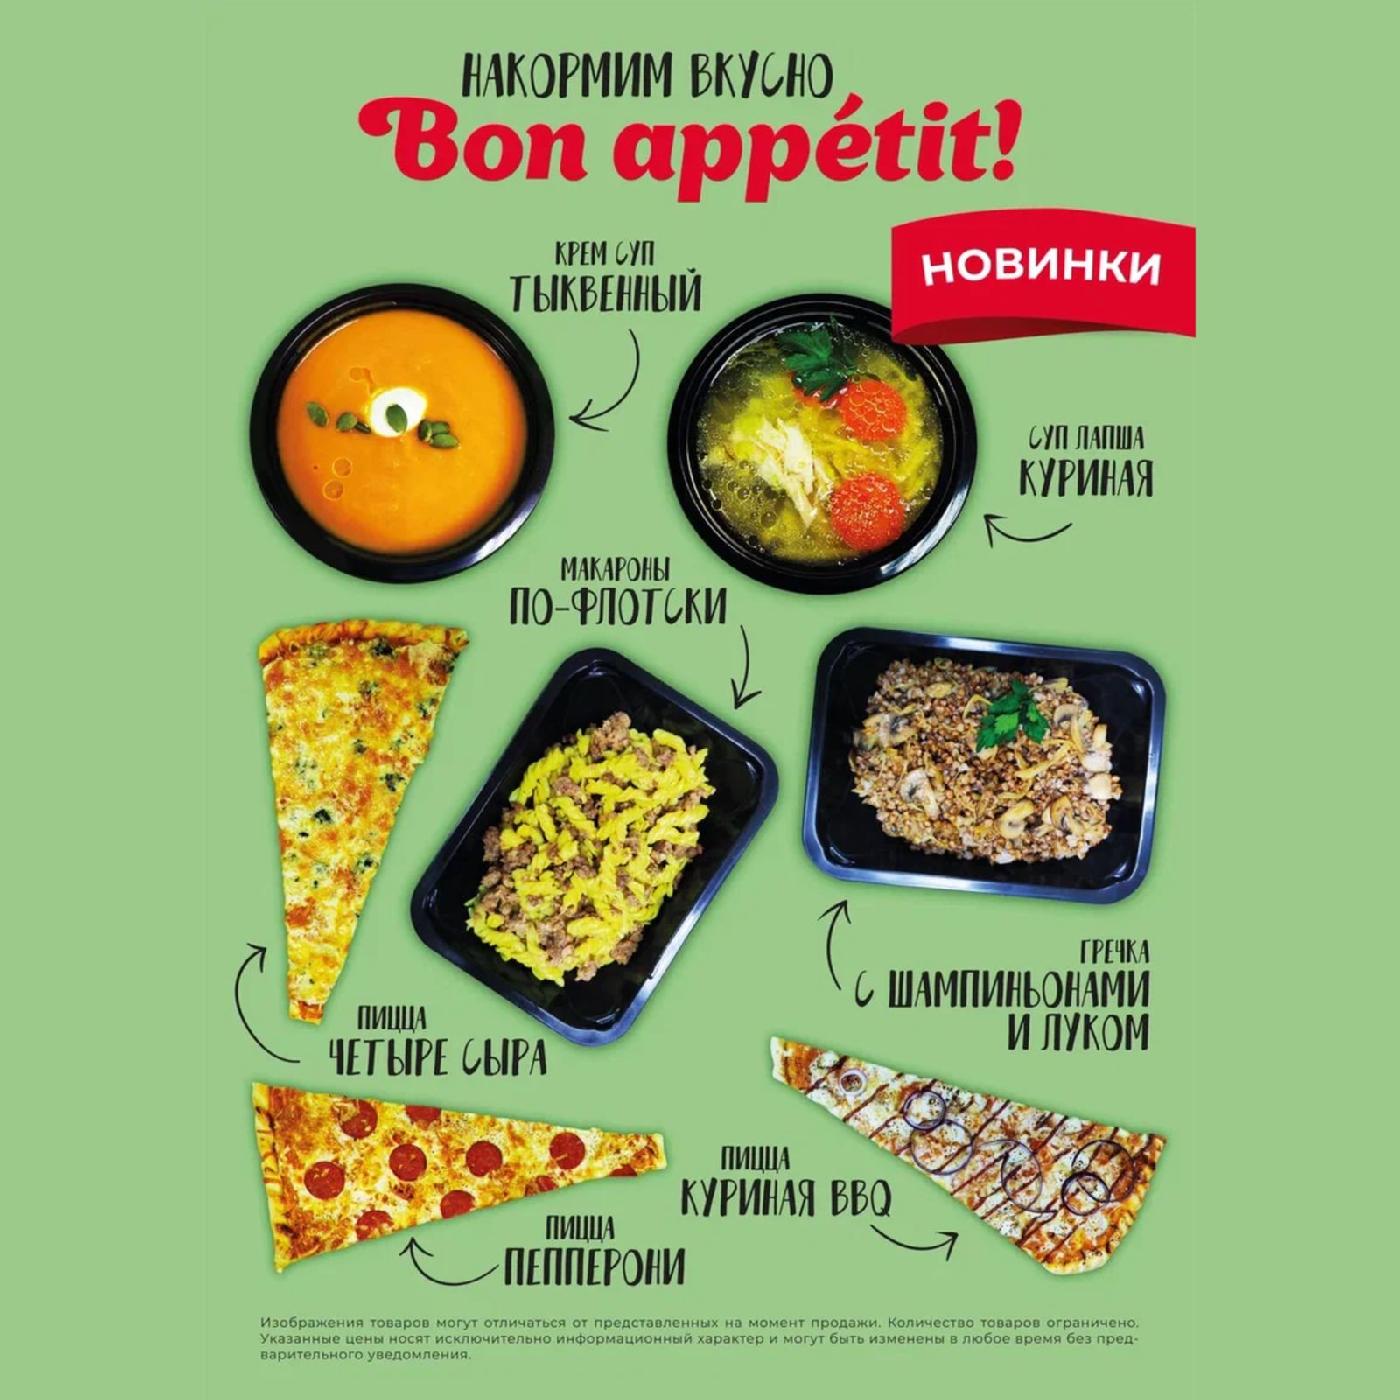 Новинки в Hotfix coffee - пицца, суп и основные блюда